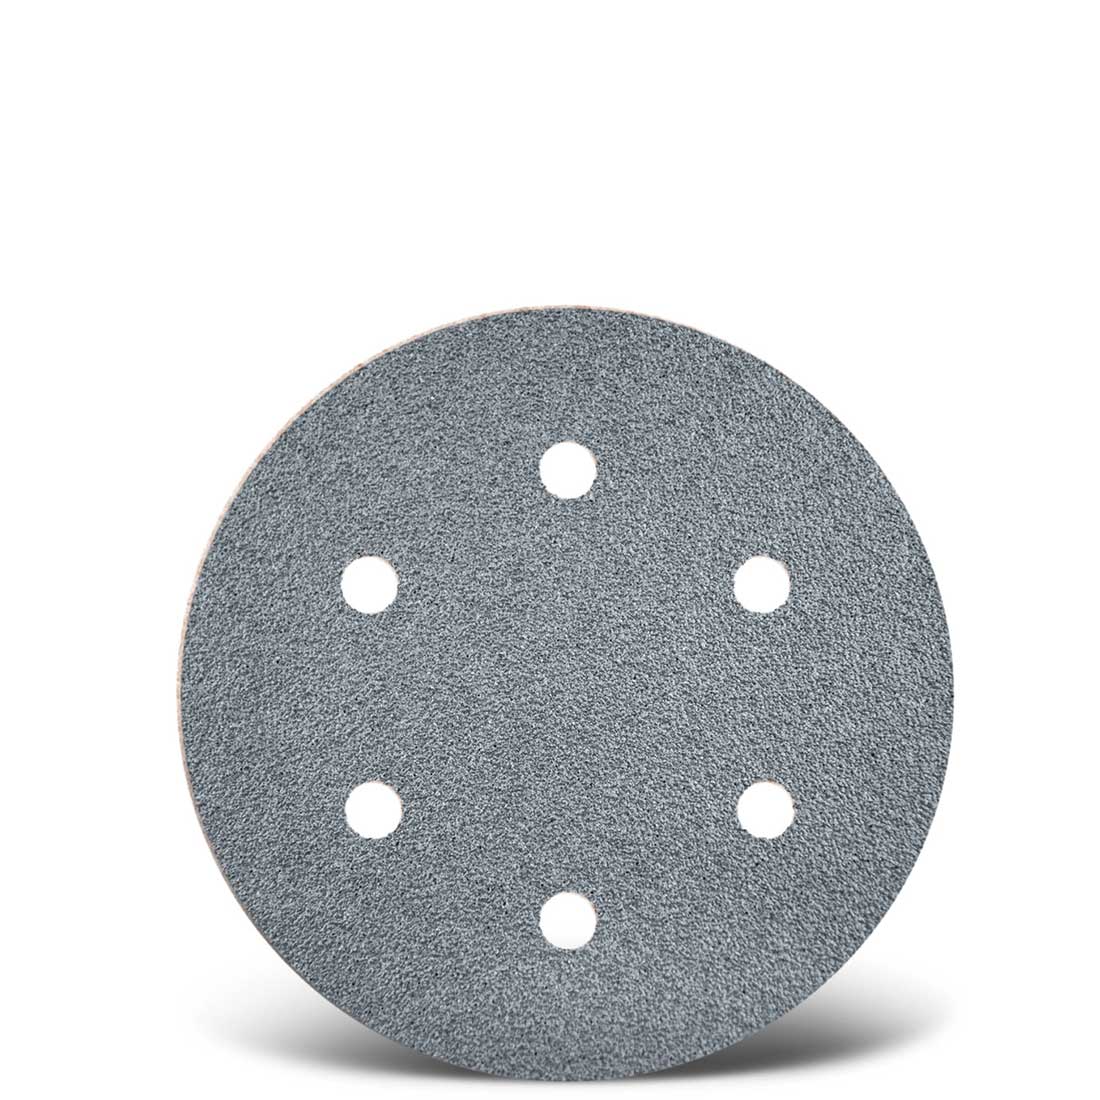 MENZER hook & loop sanding discs for random orbital sanders, G40–400, Ø 150 mm / 6 hole / semi-friable aluminium oxide